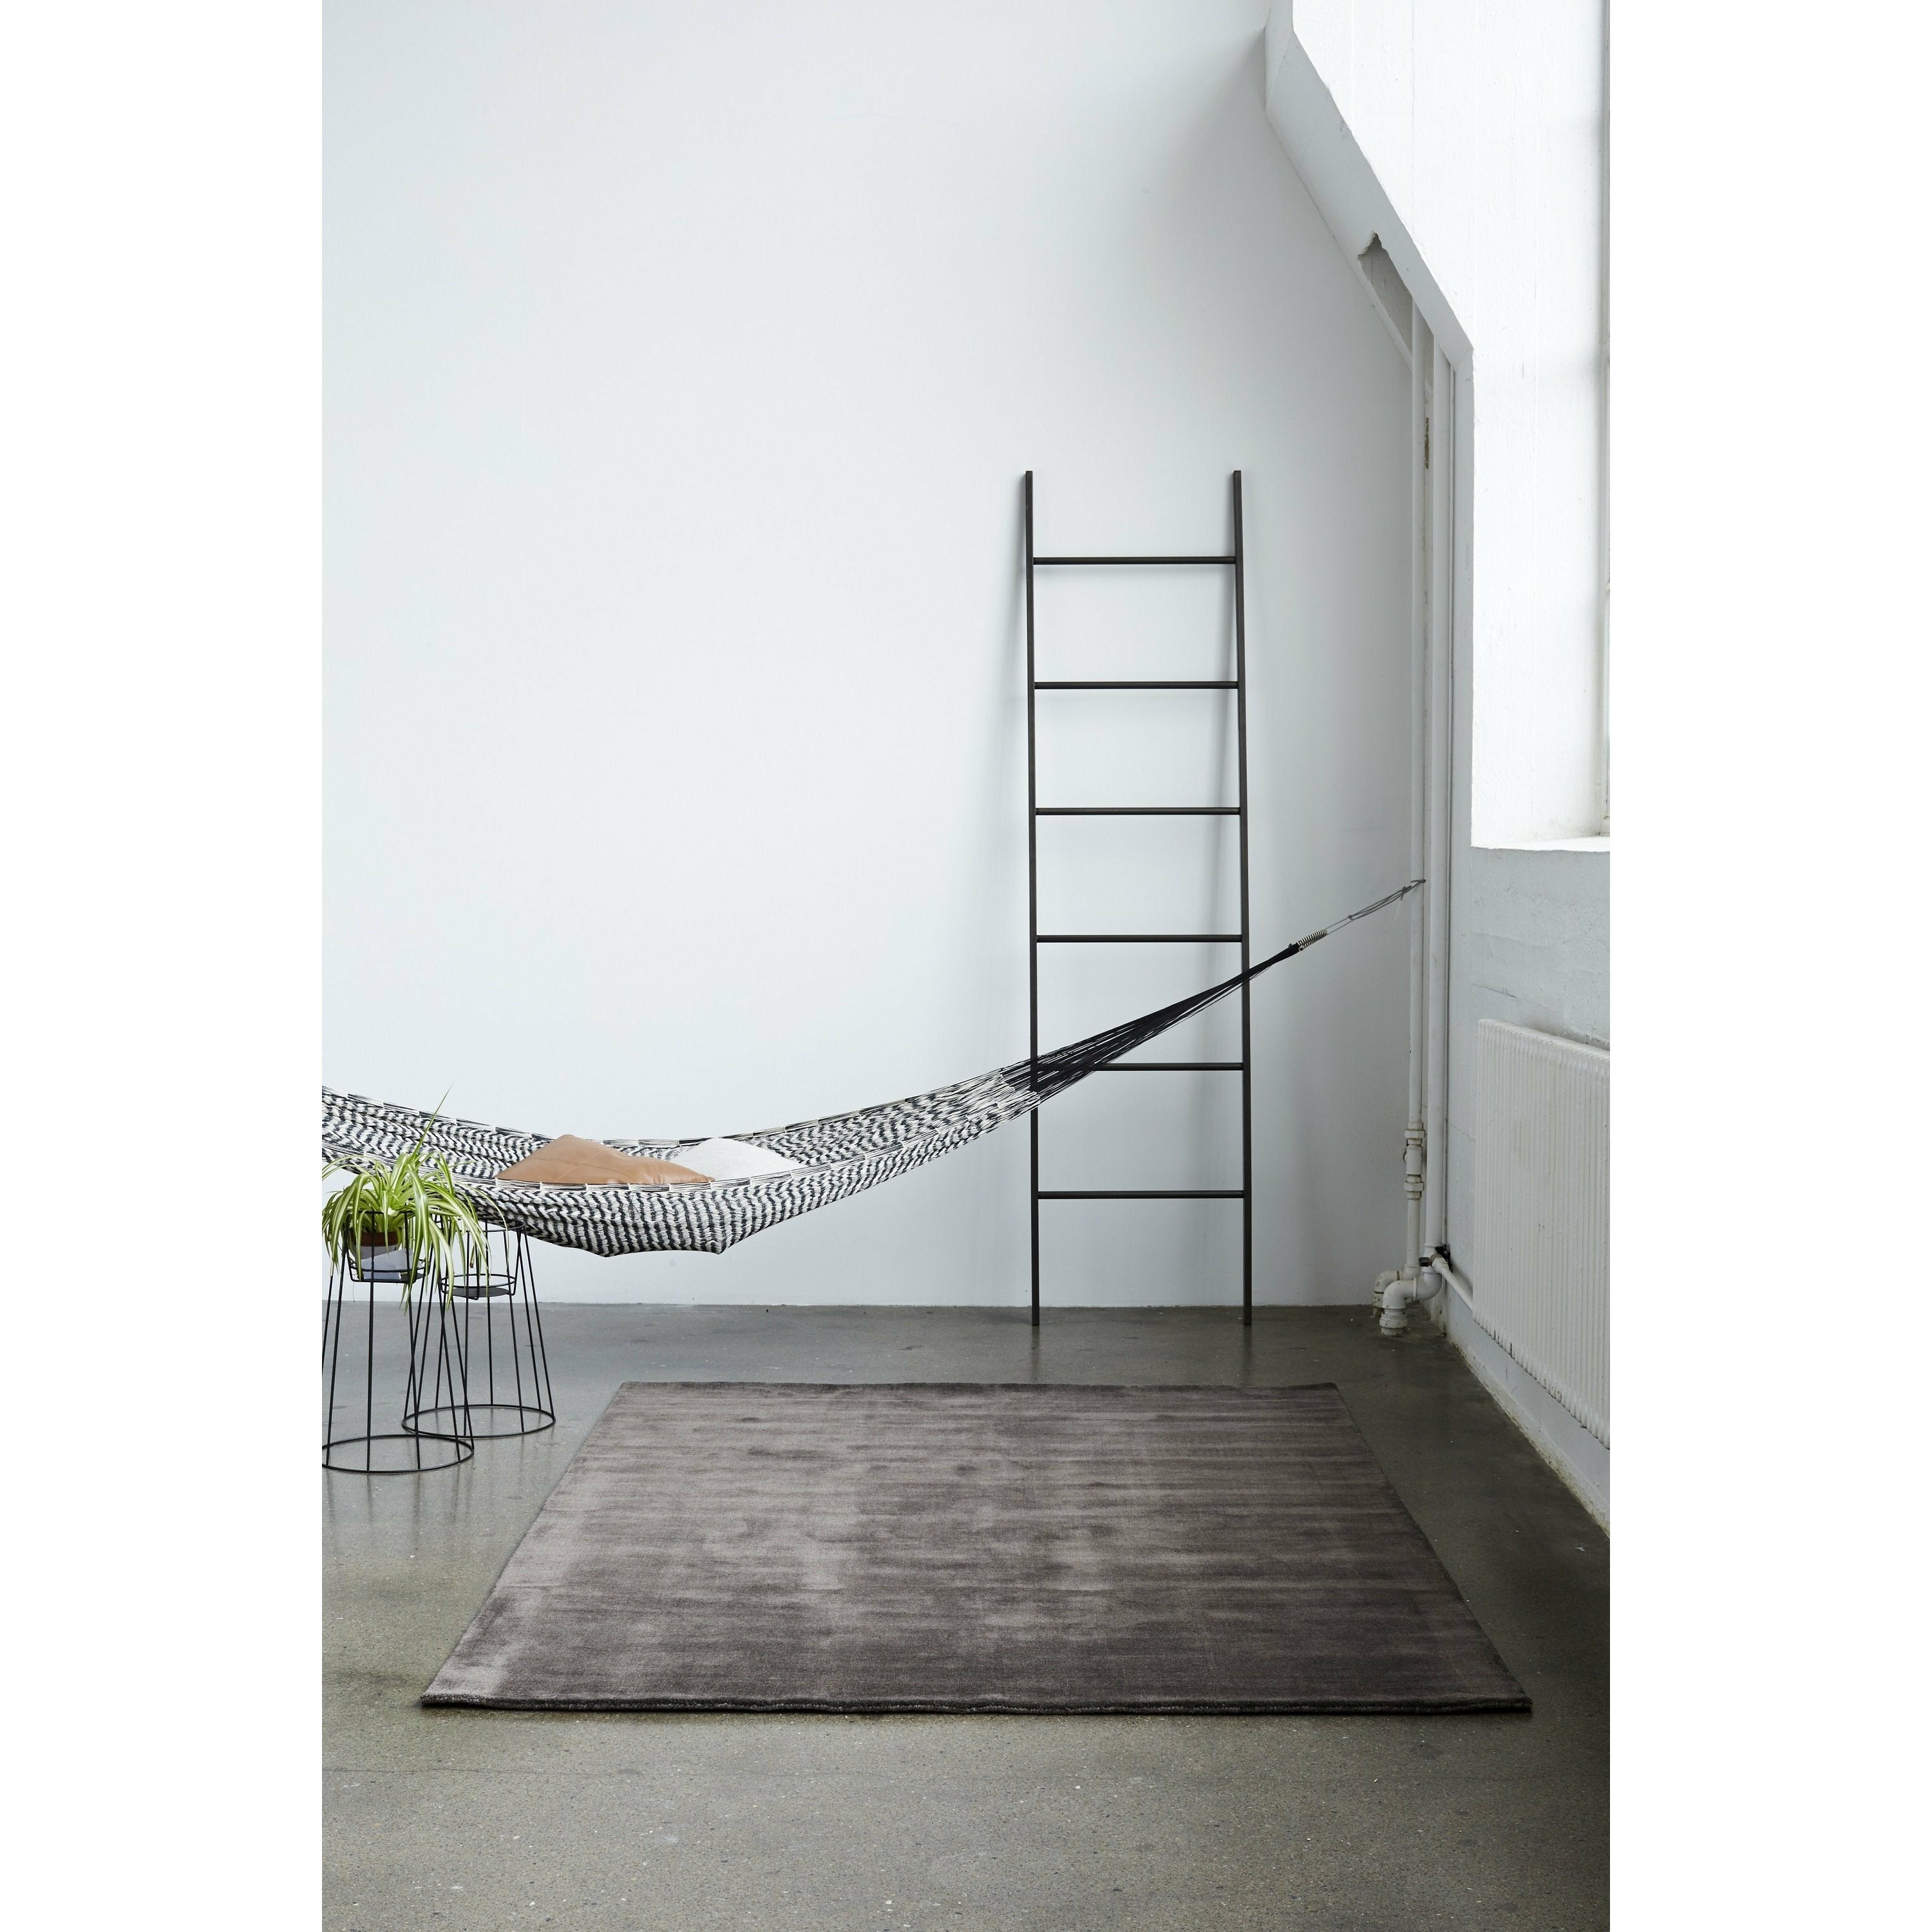 Massimo Země bambusový koberec teplá šedá, 170x240 cm